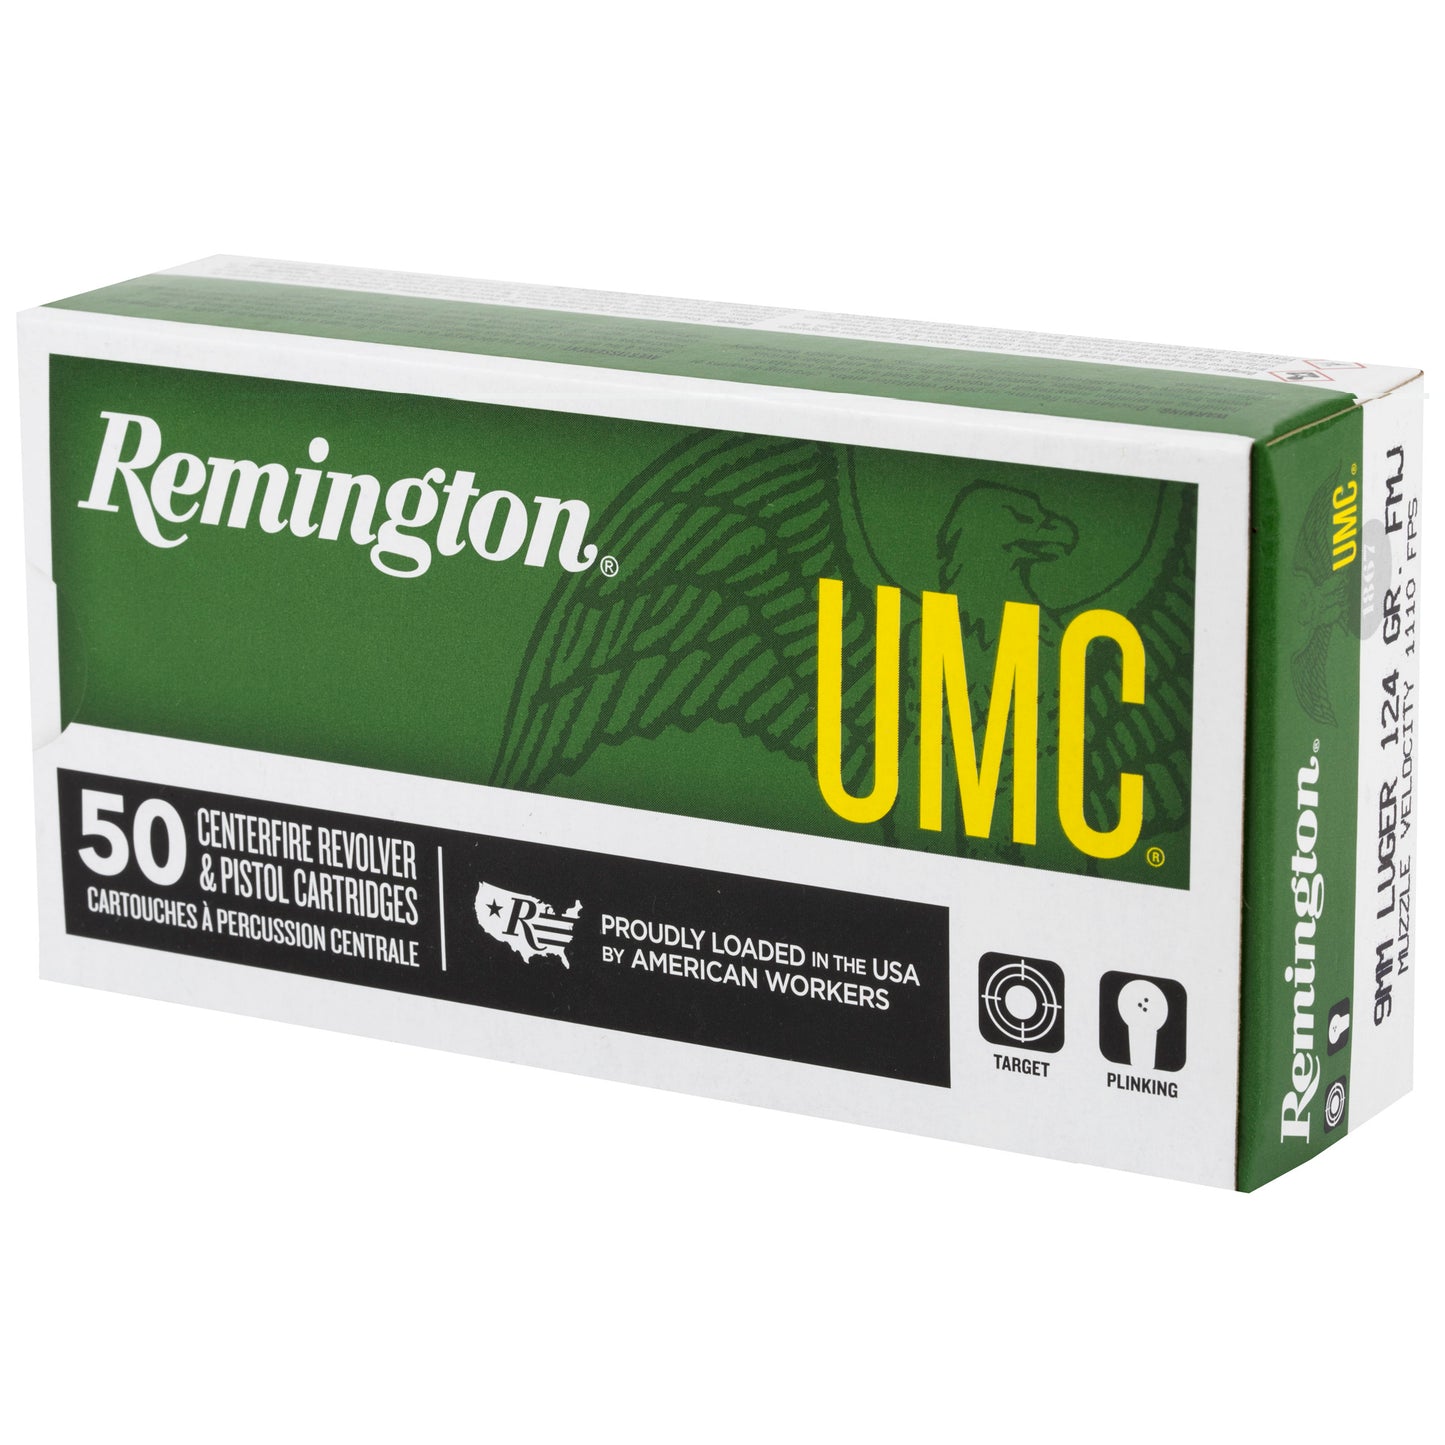 Remington, UMC, 9MM, 124 Grain, Full Metal Jacket, 50 Round Box